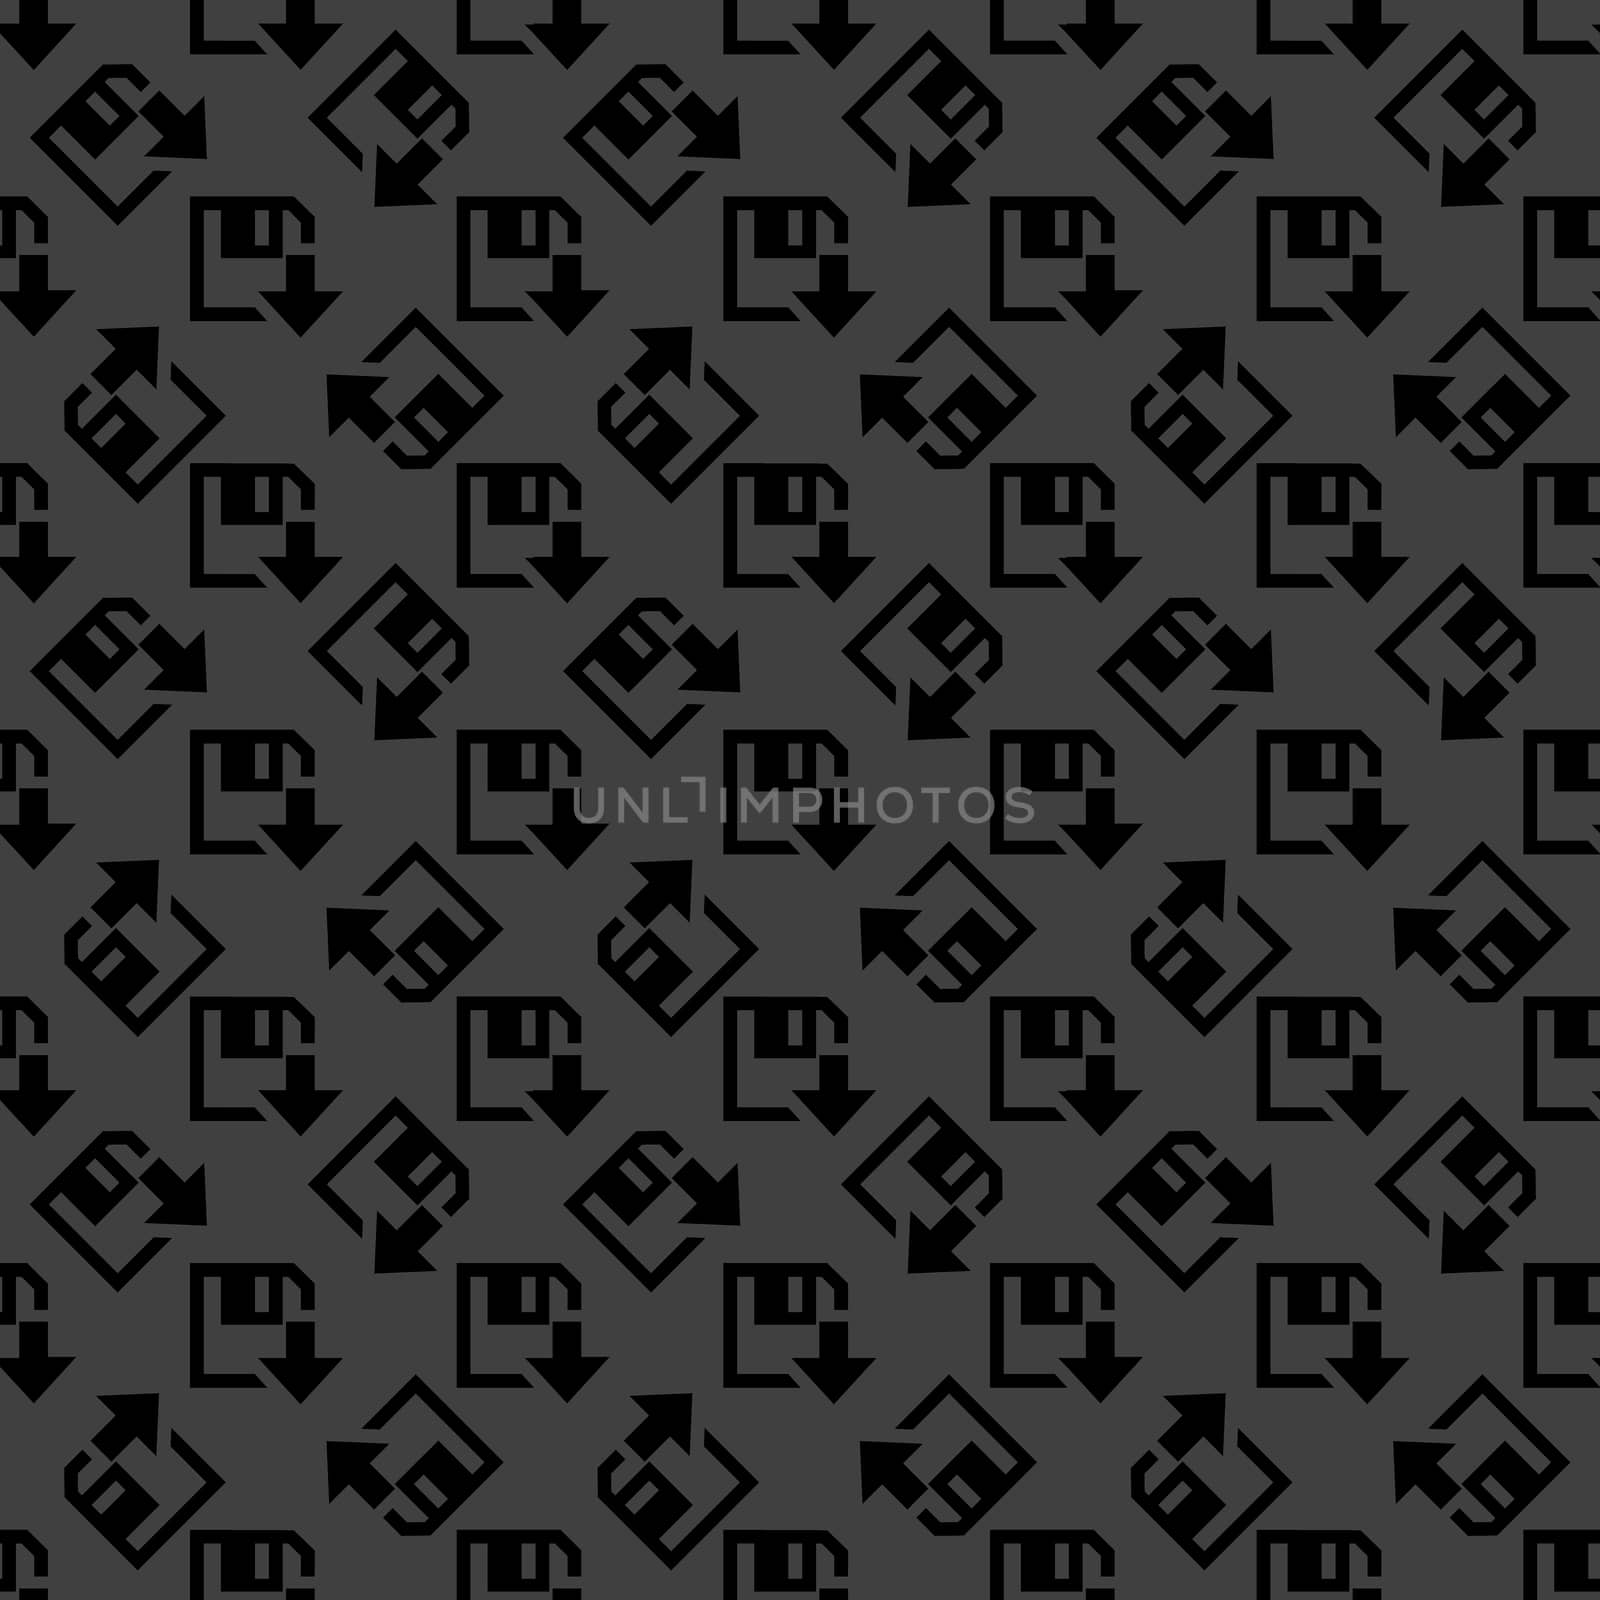 floppy disk download web icon. flat design. Seamless gray pattern.